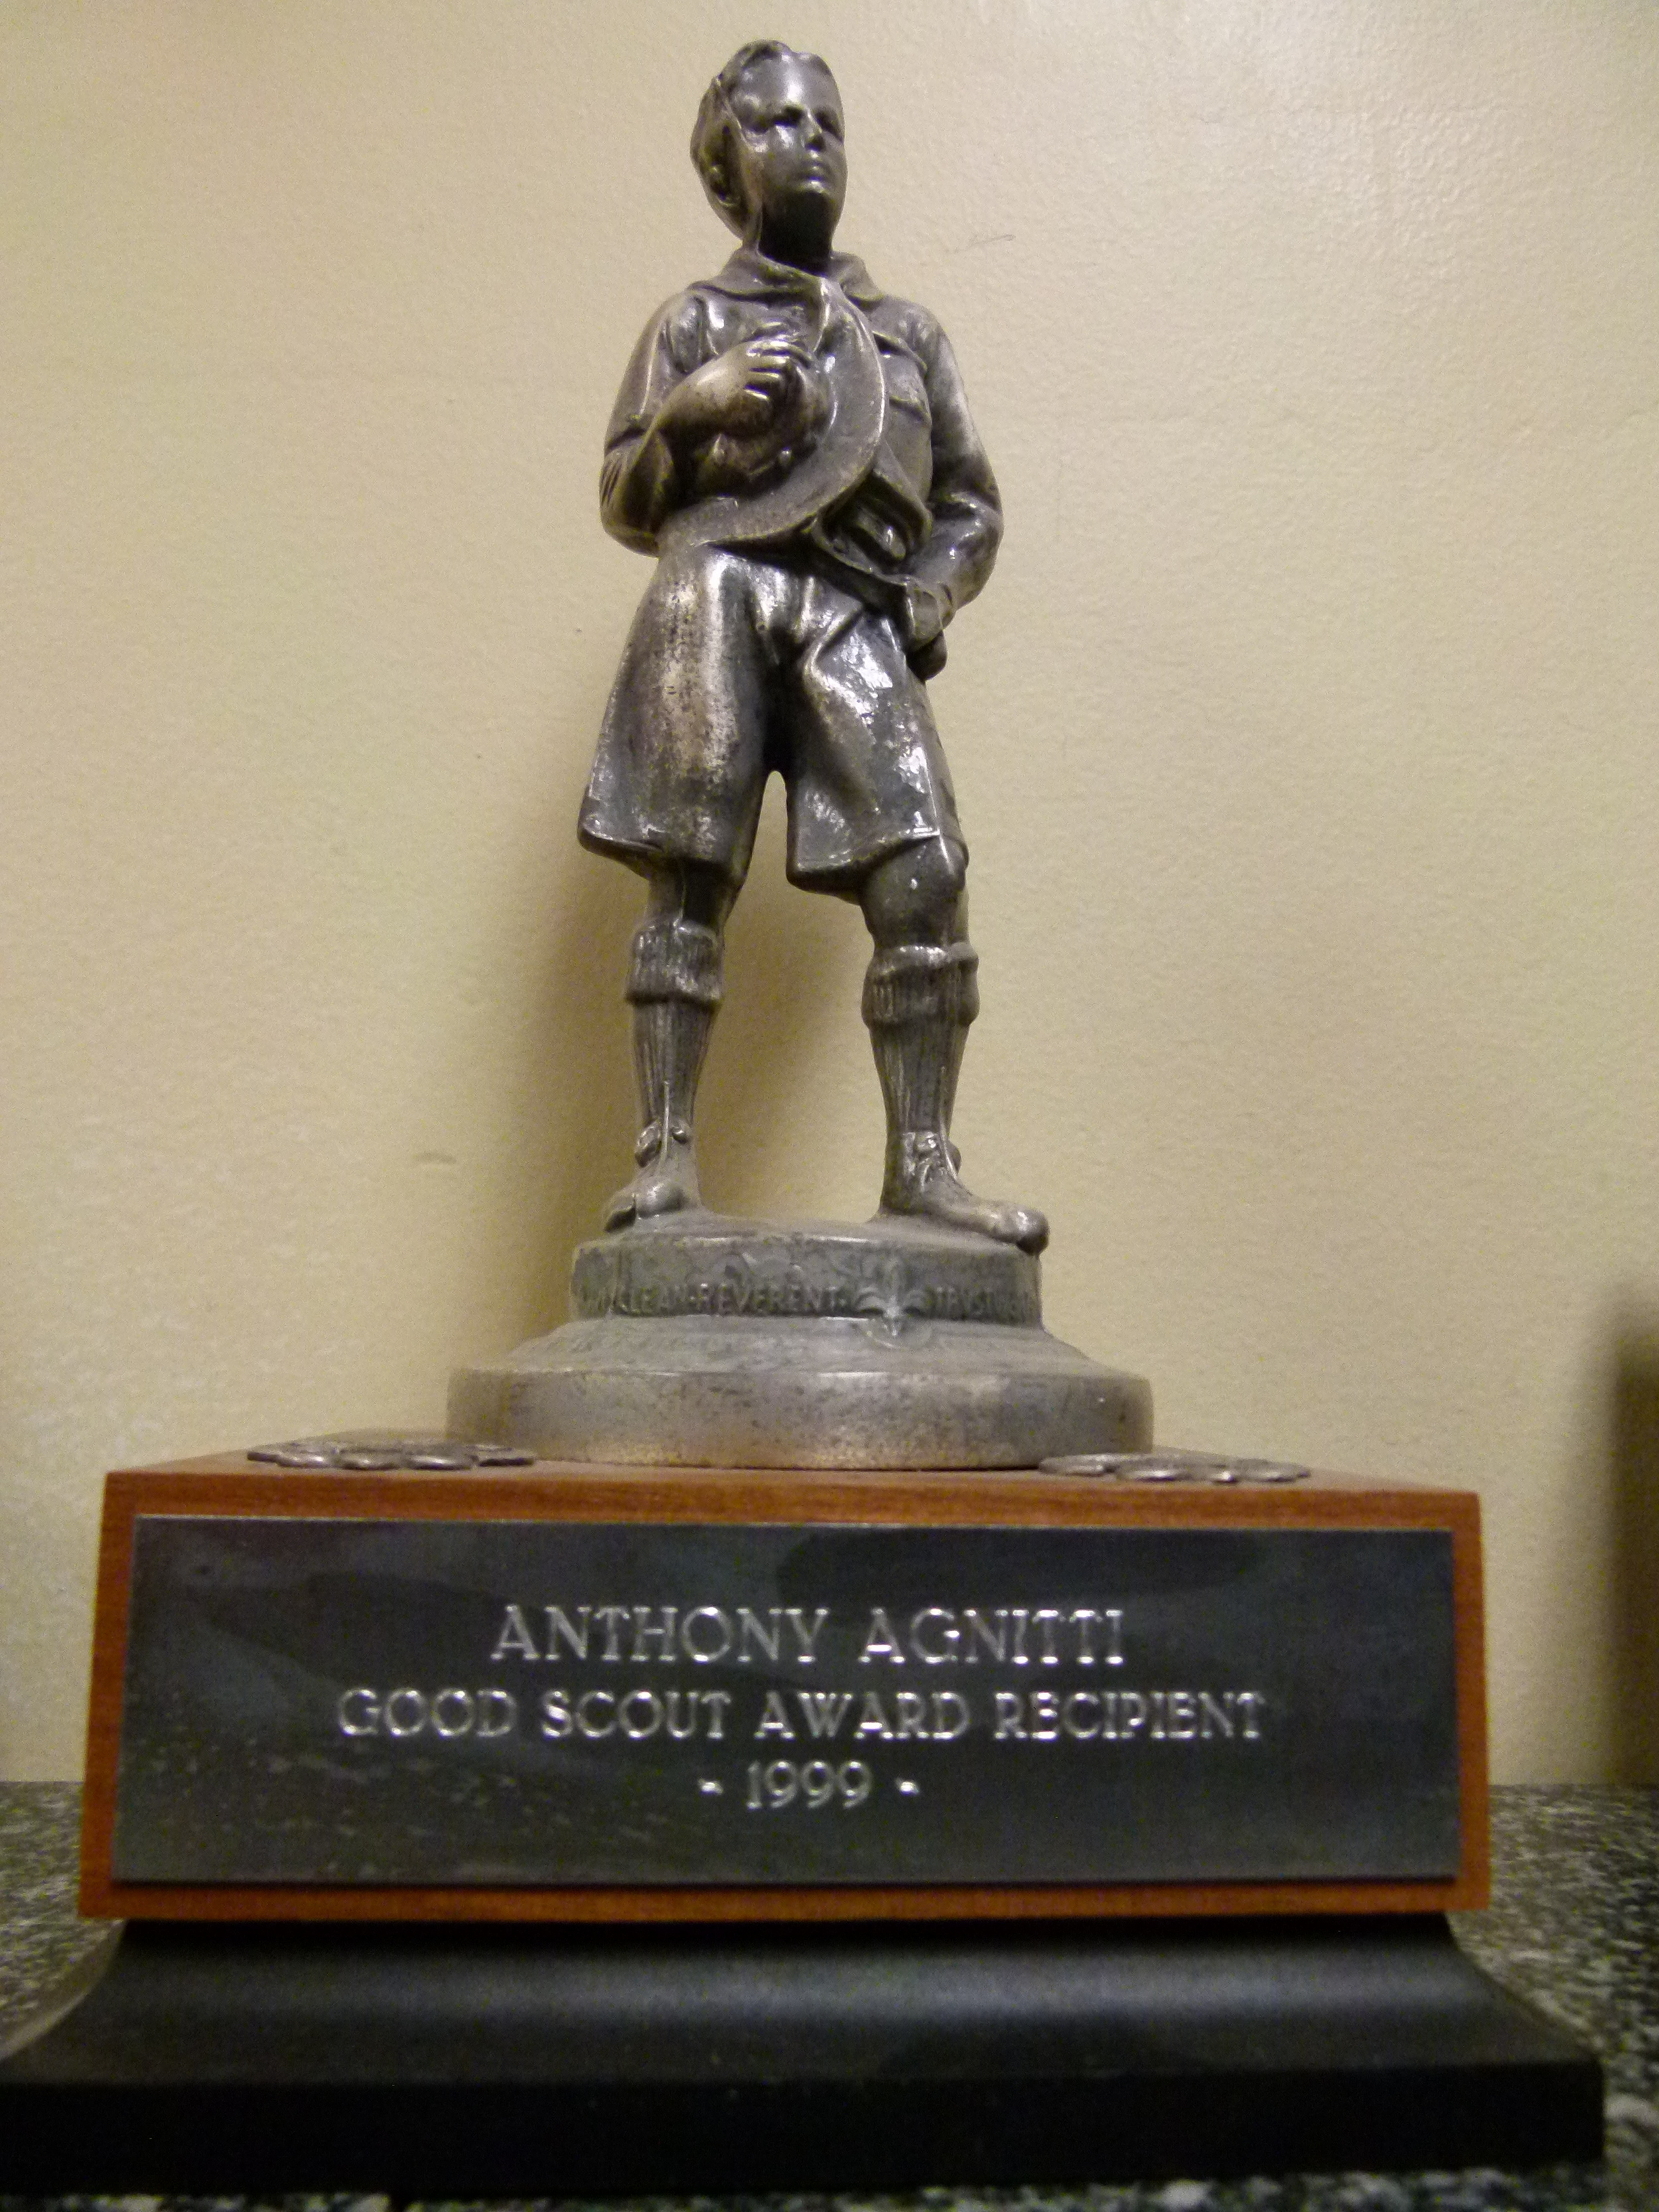 Anthony-Agnitti-Good-scout-award-recipient